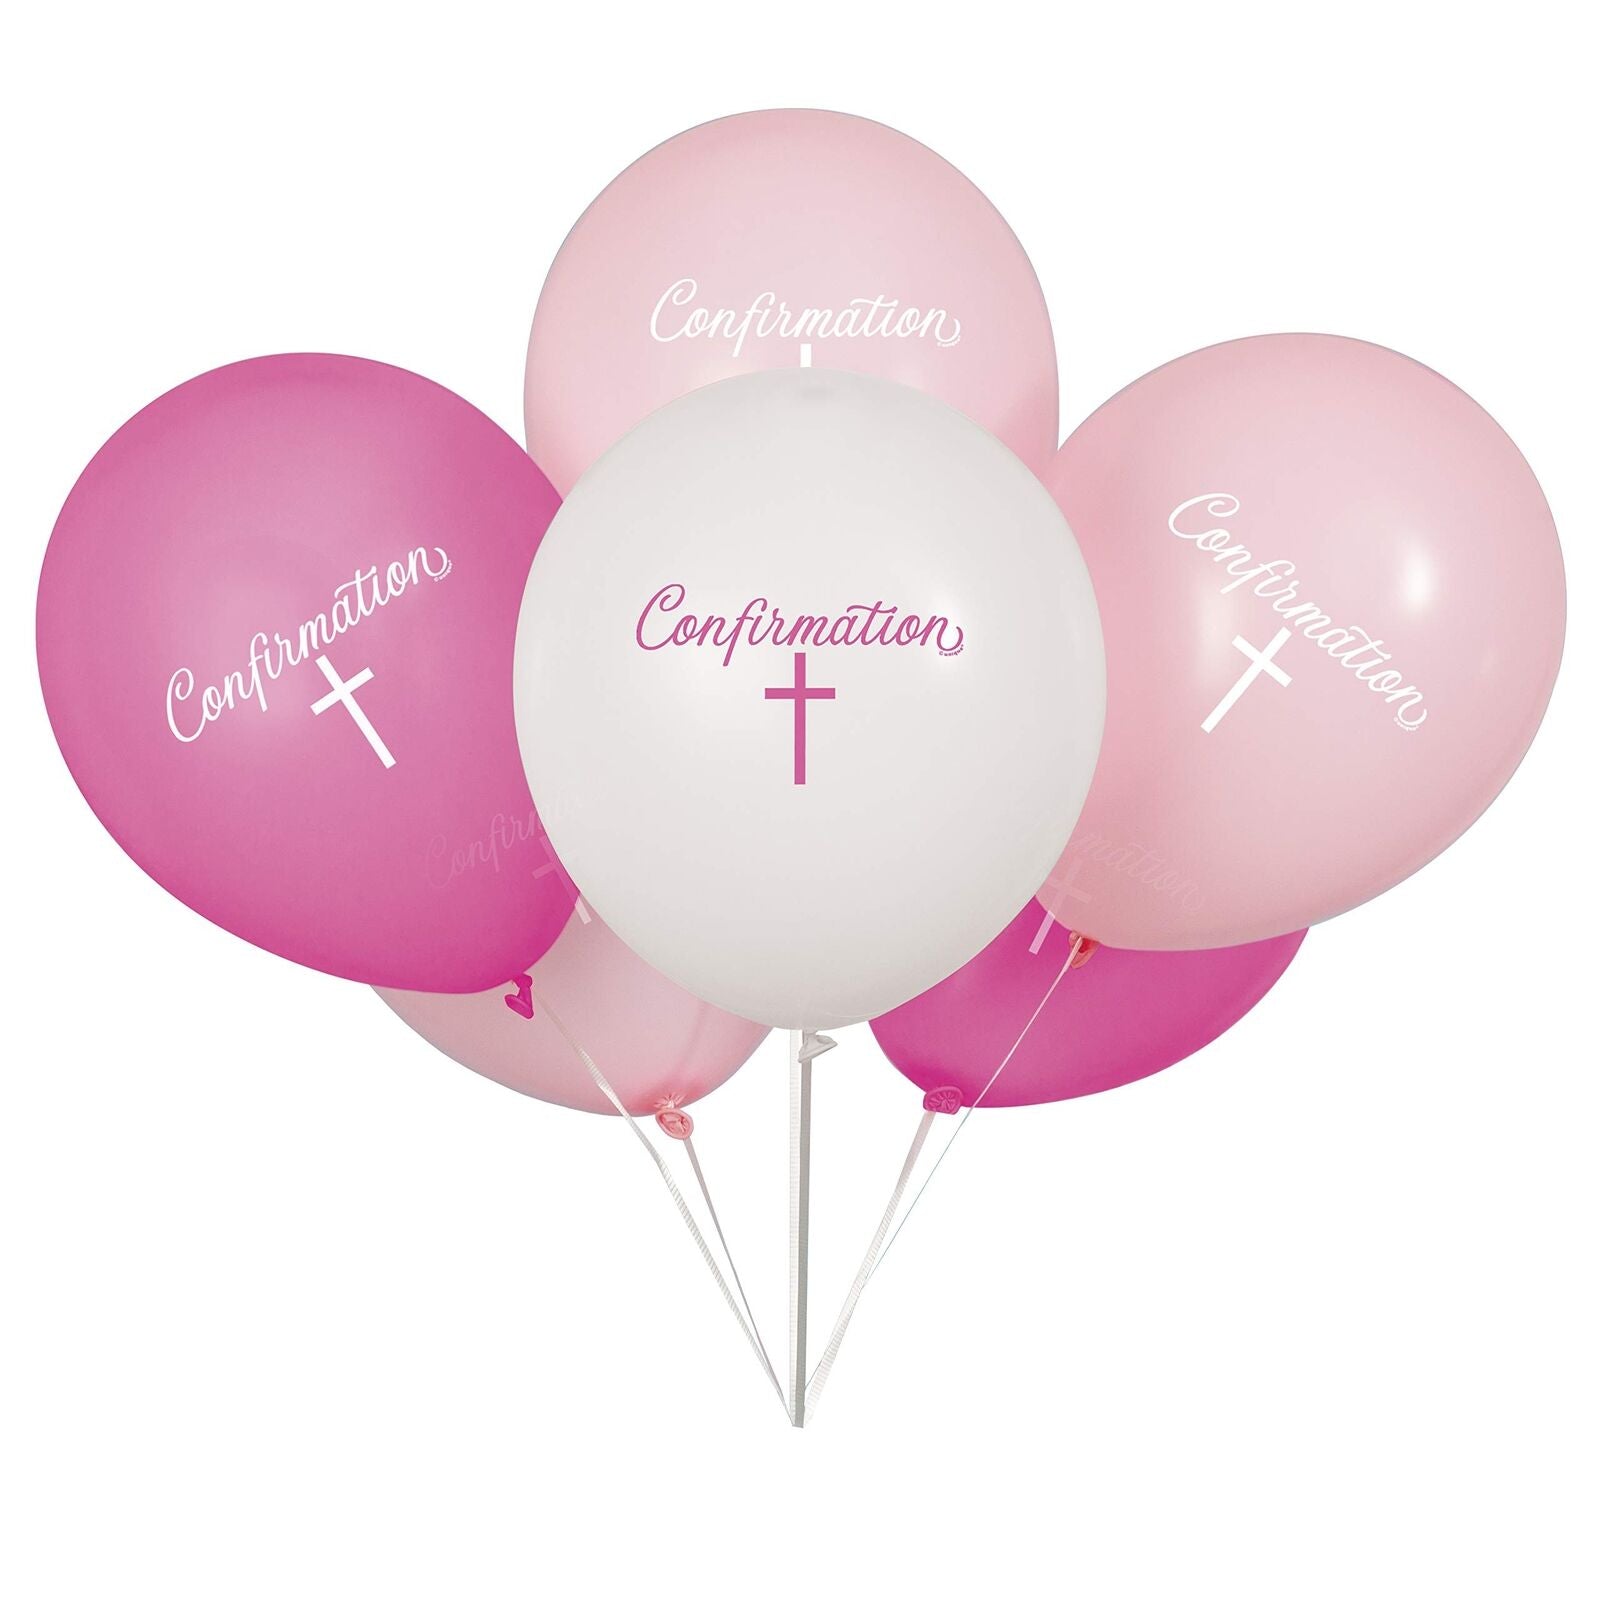 Confirmation Latex Balloons